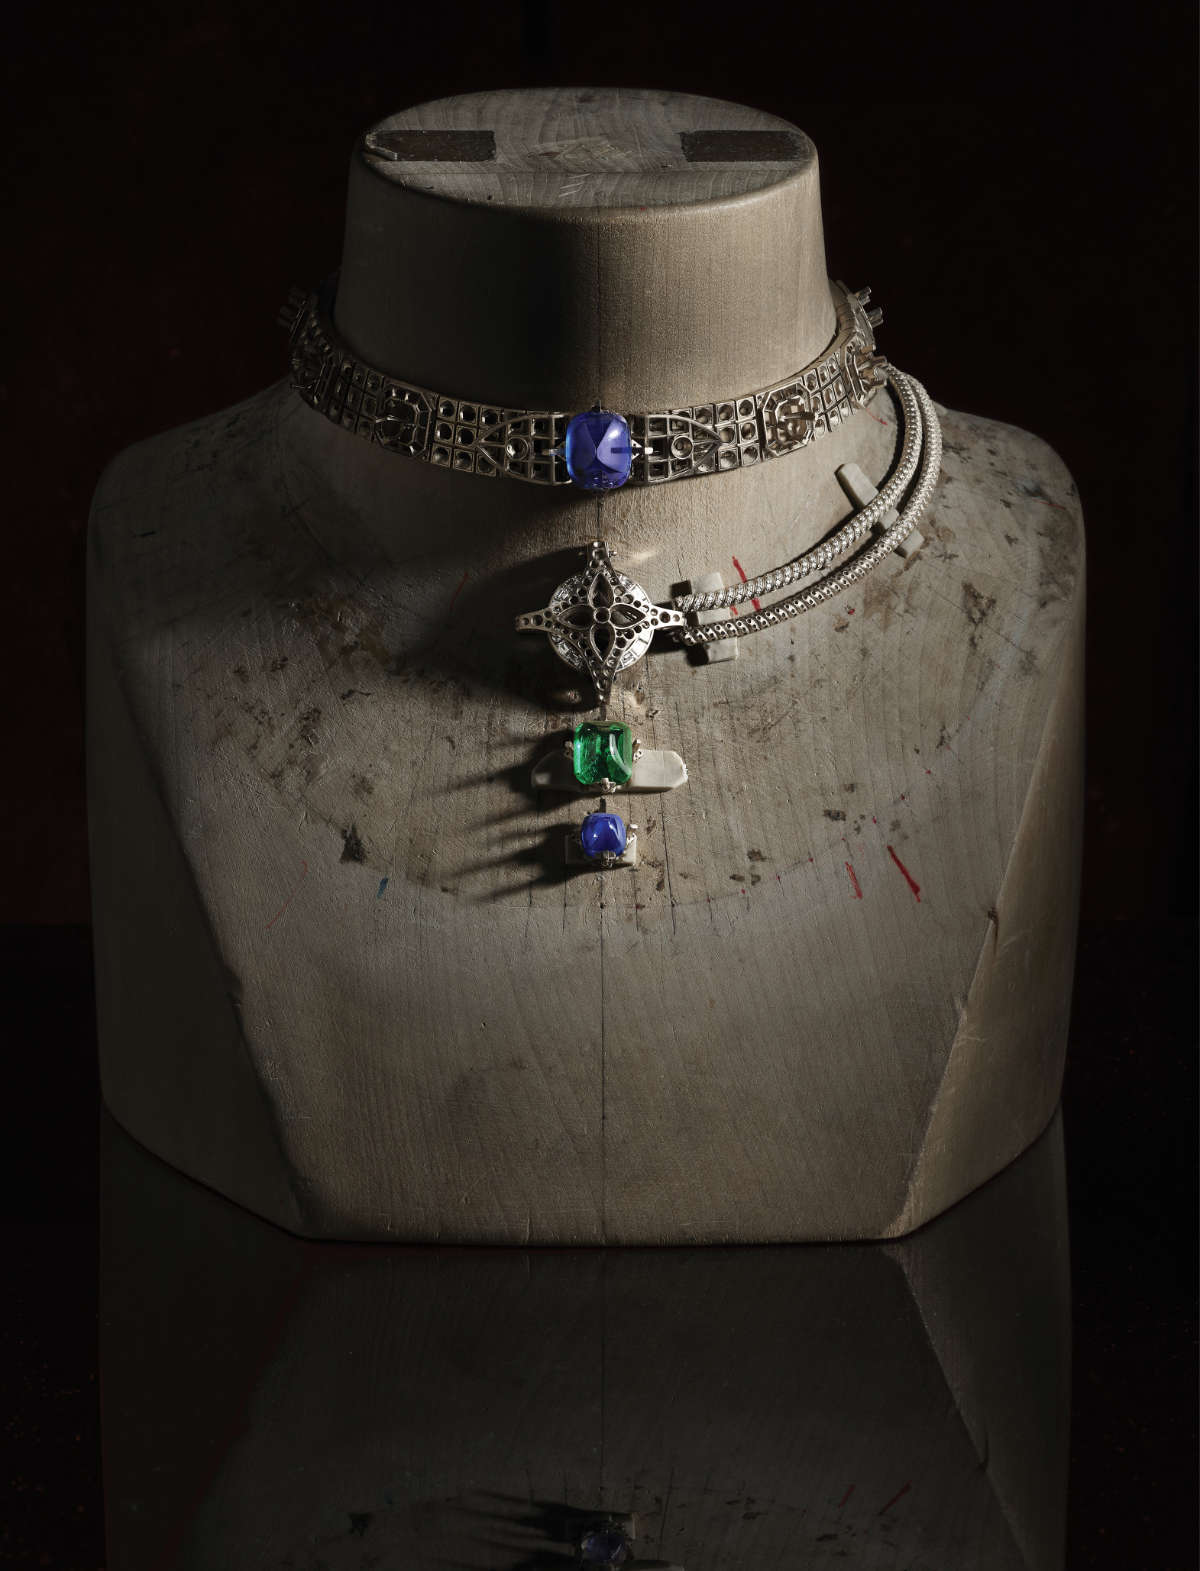 Fantastical Jewels By Francesca Amfitheatrof